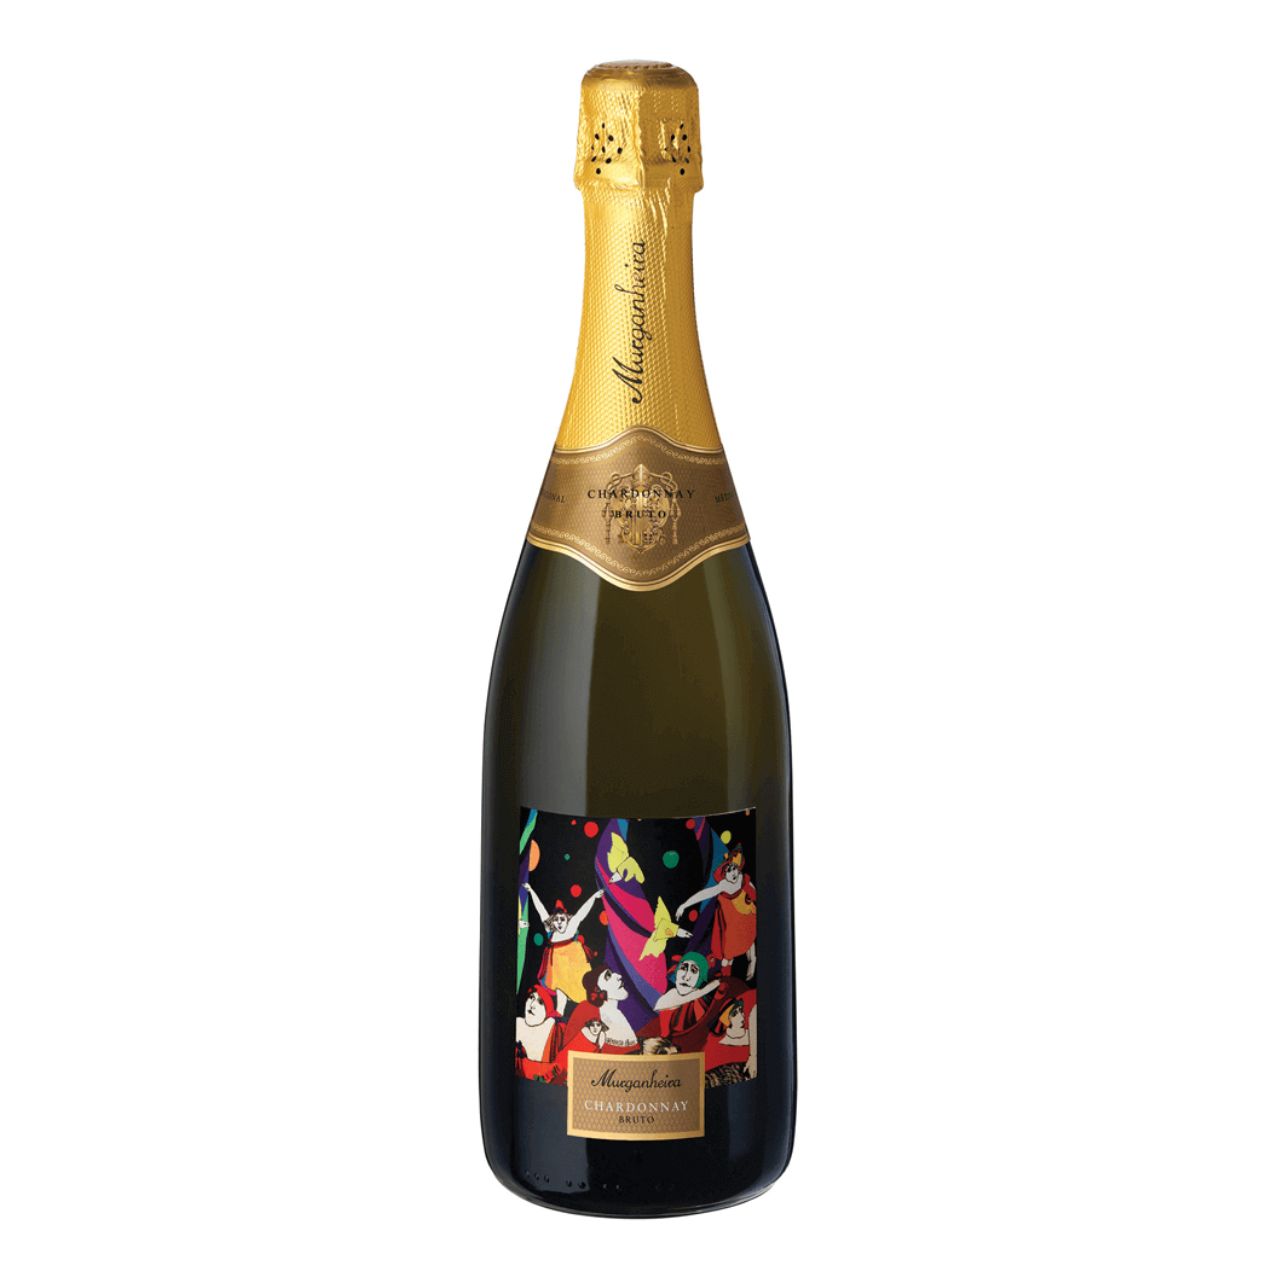 Murganheira Chardonnay Bruto 2014 (32,00€ / litro) 